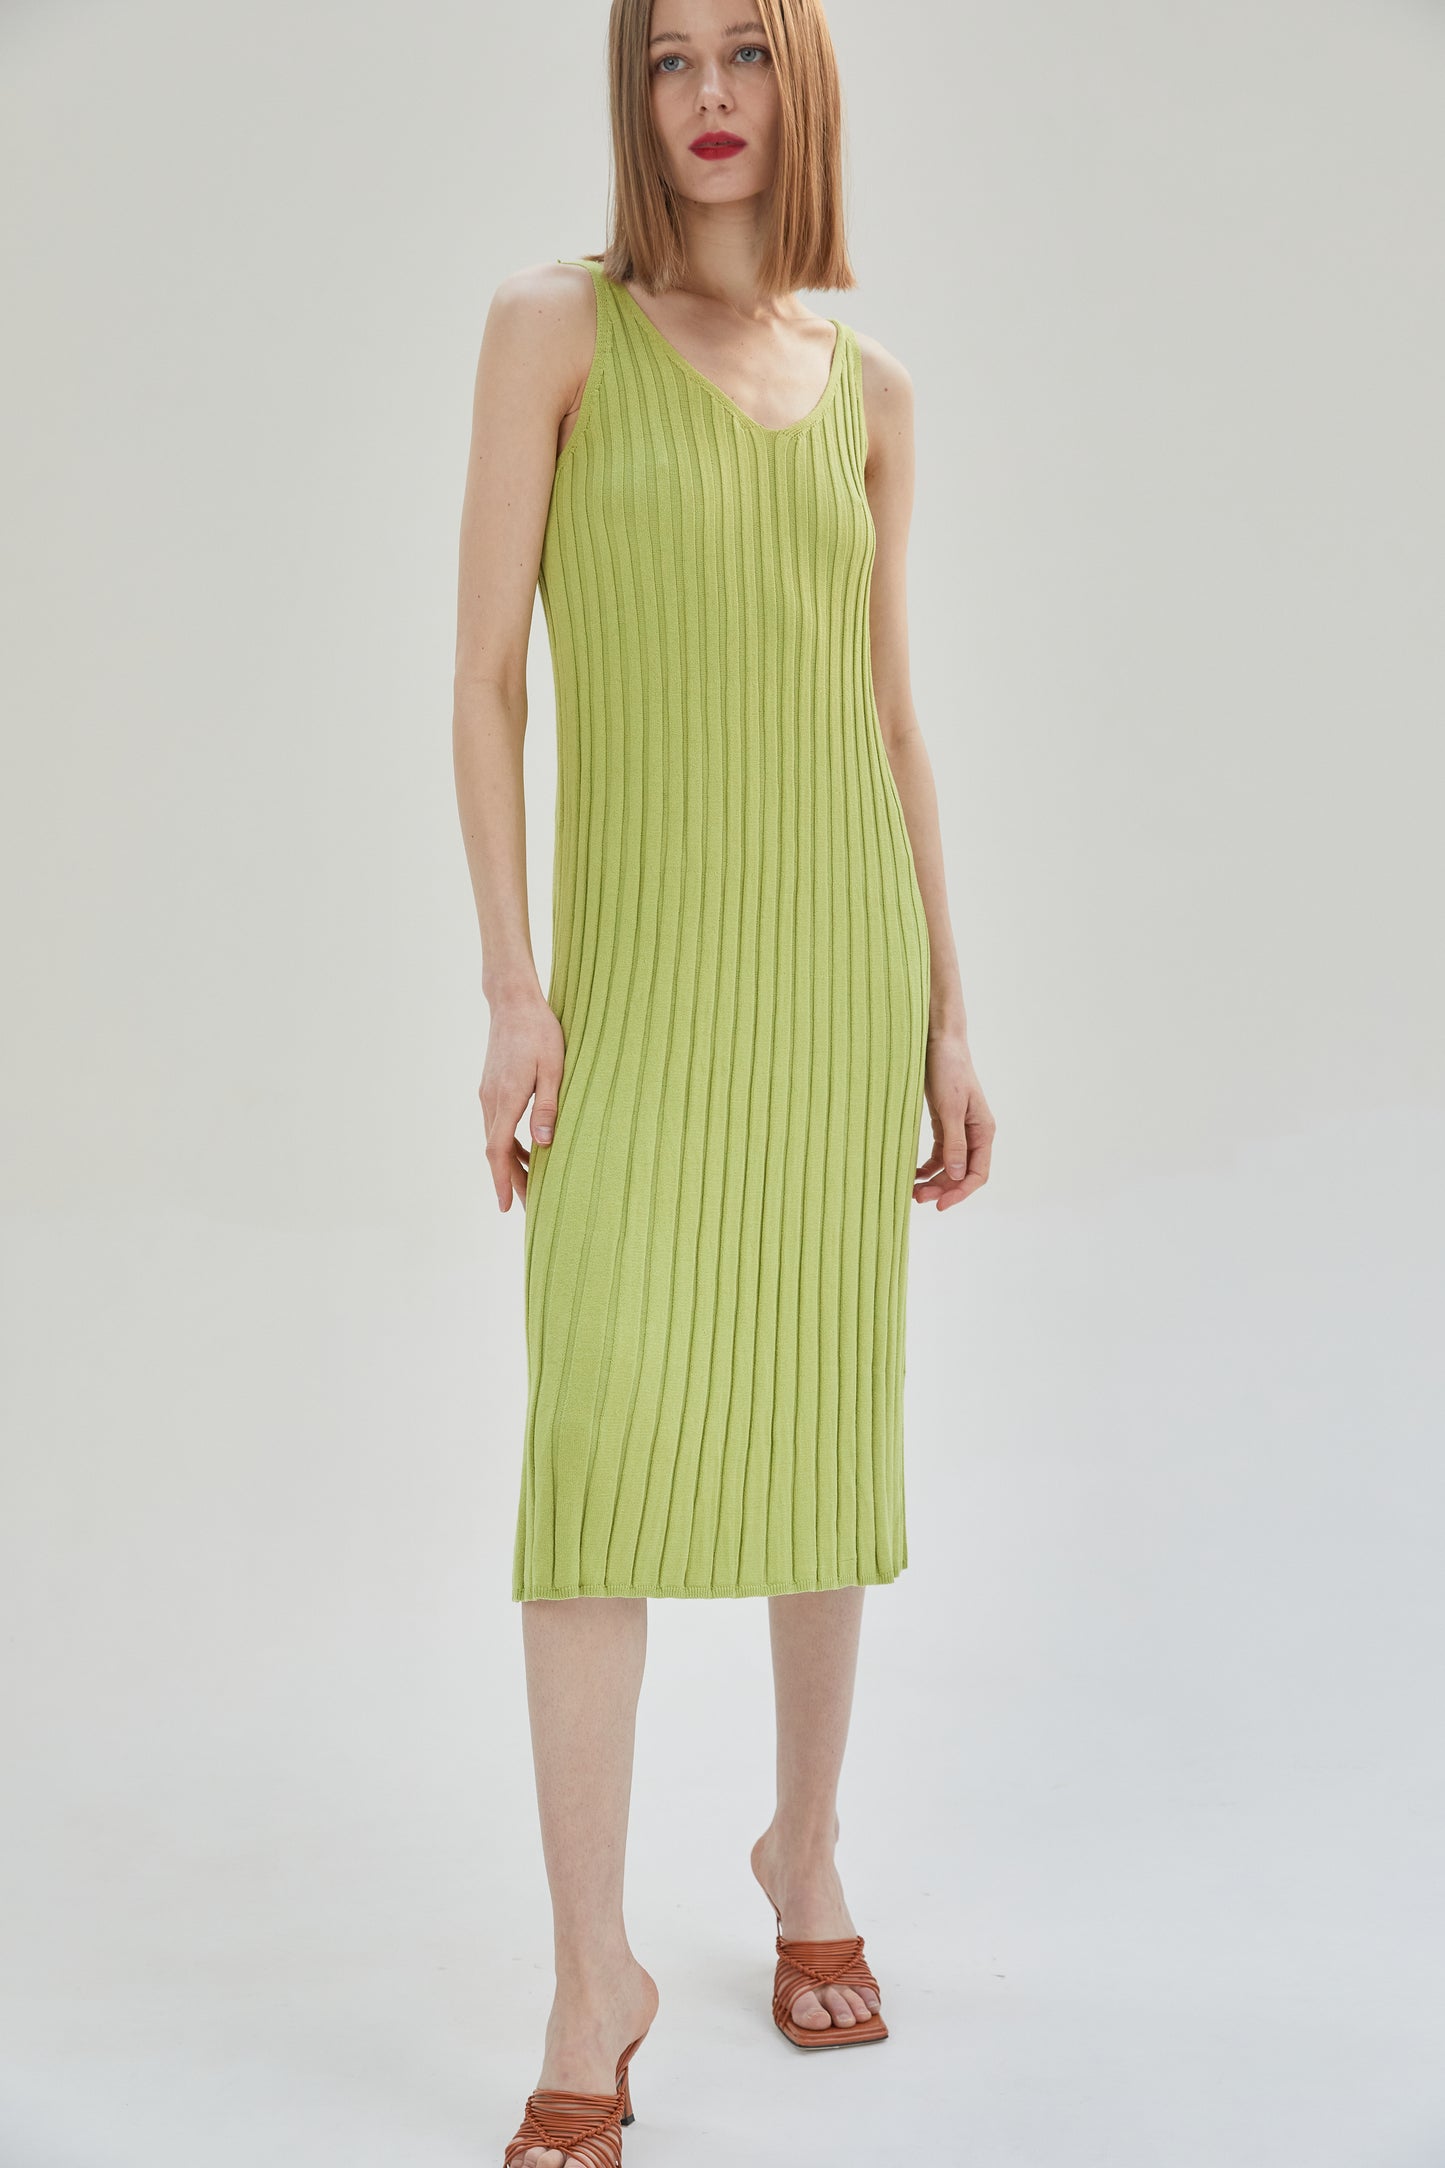 Ribbed V-Shaped Knit Dress, Lime